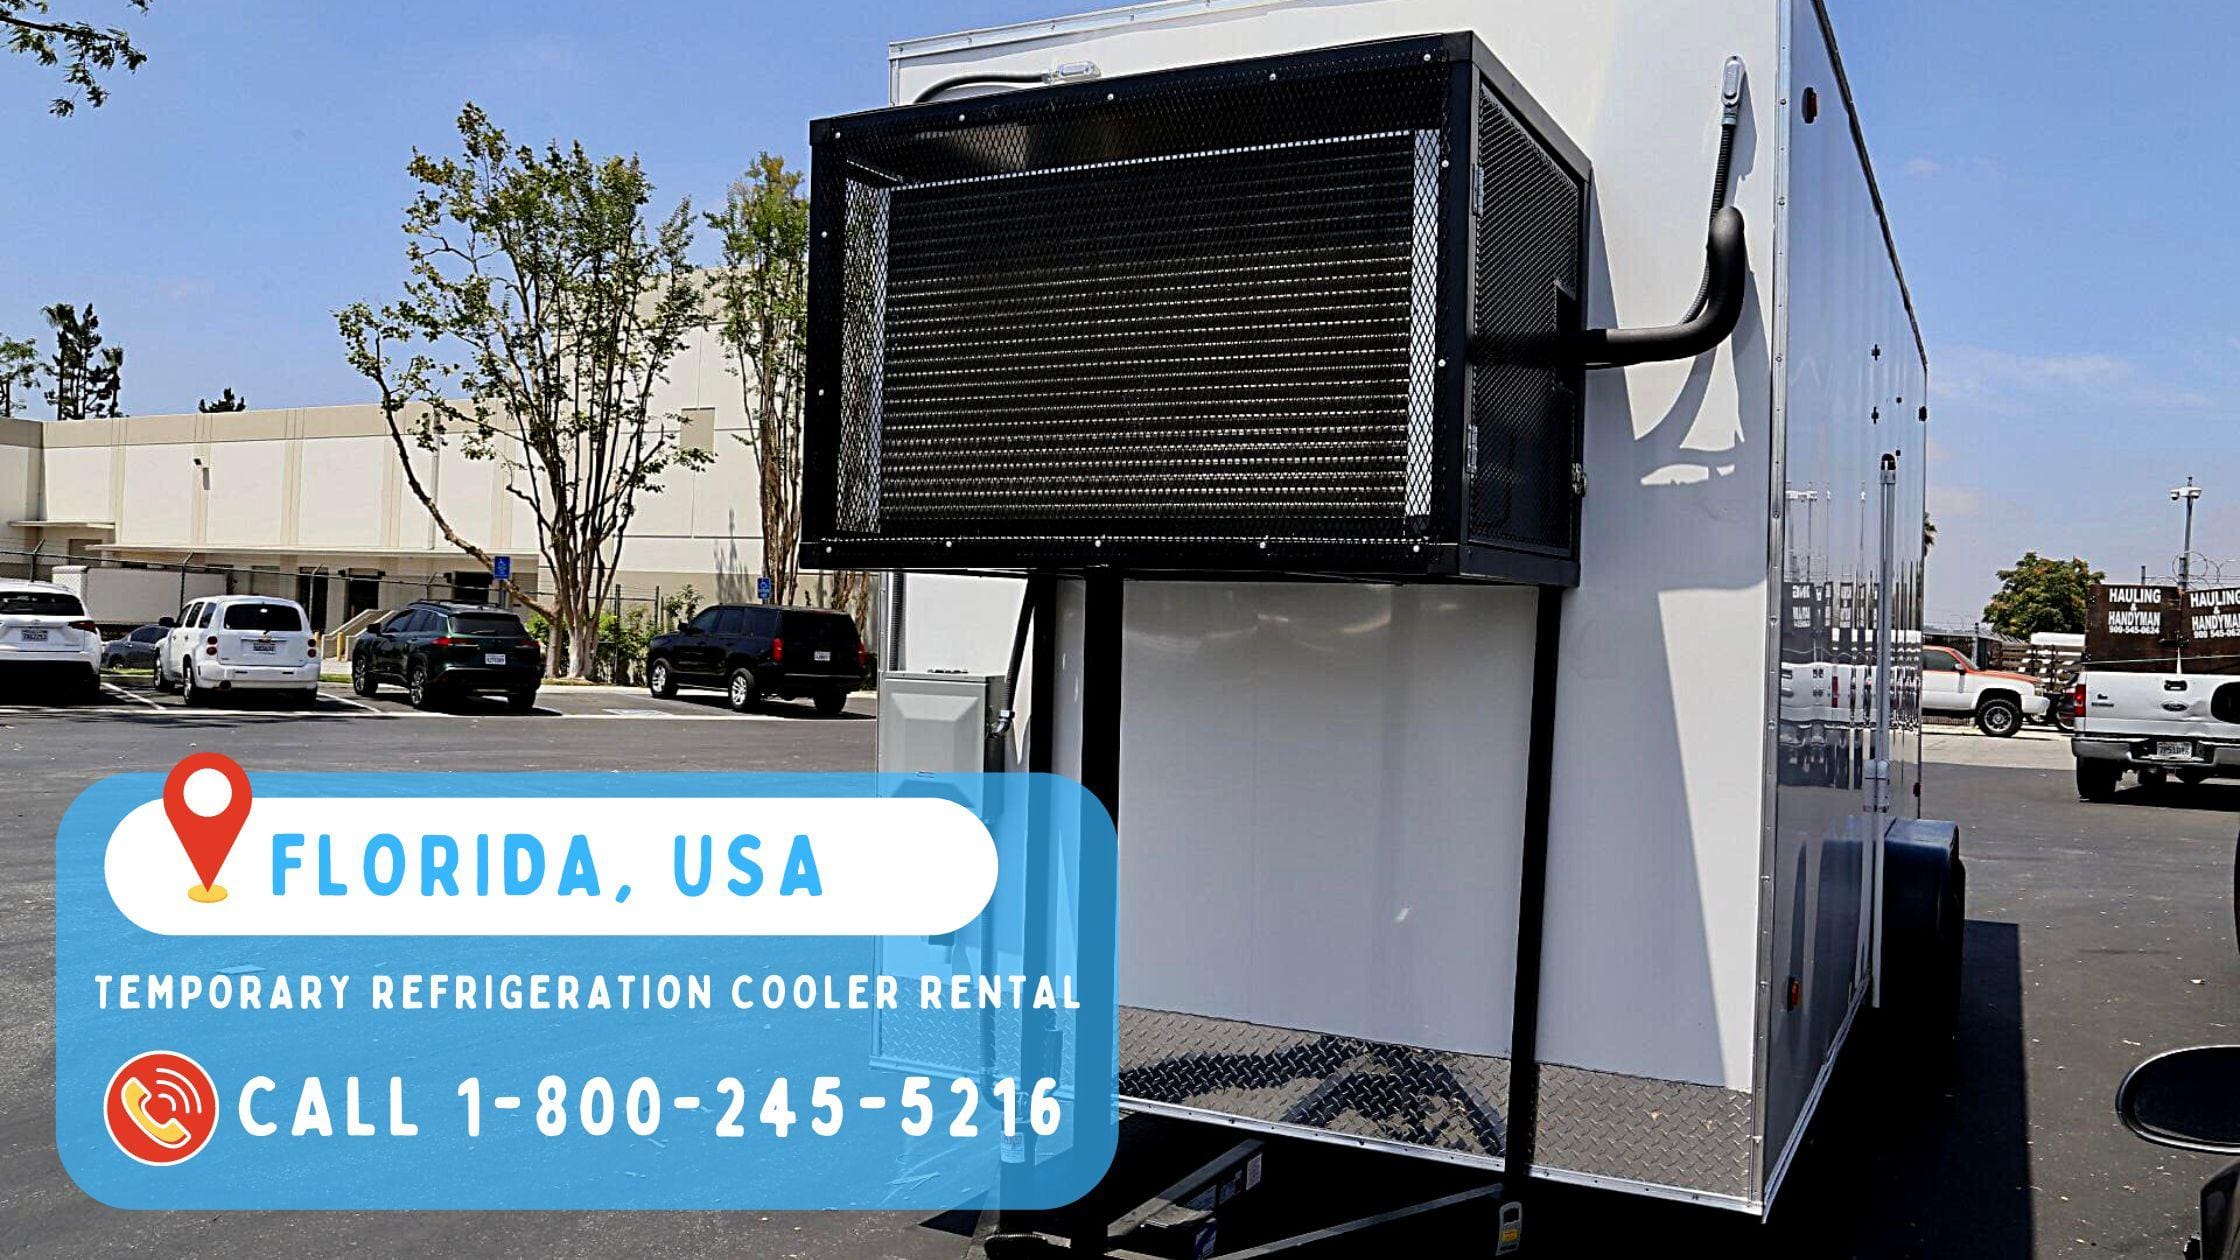 Temporary Refrigeration Cooler Rental in Florida